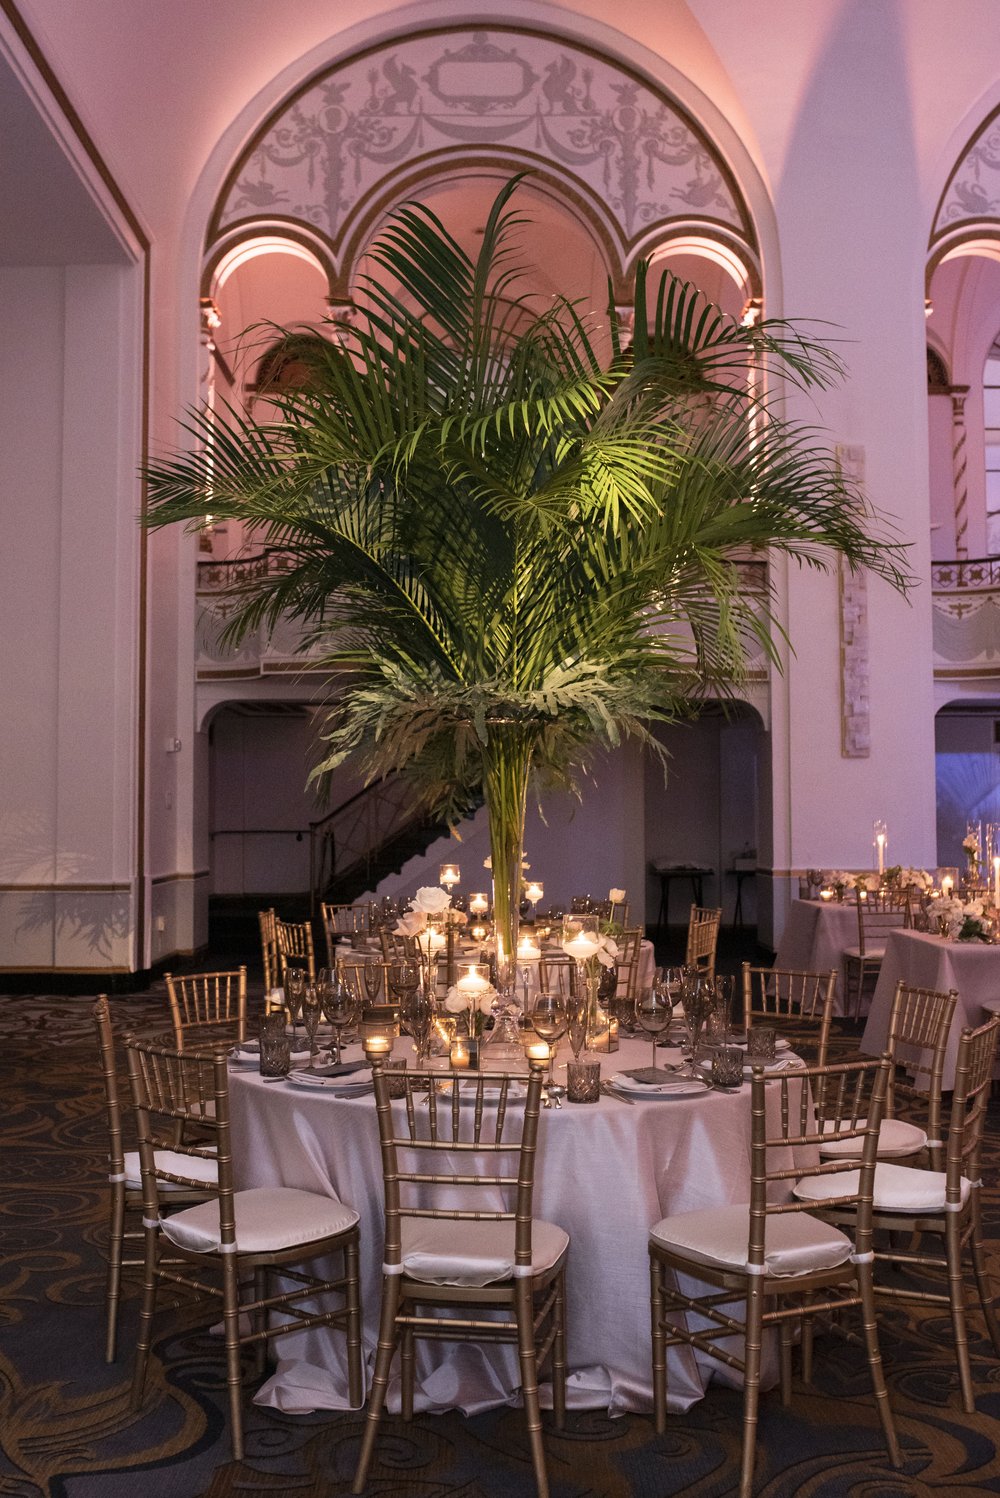 Boston ballroom wedding reception photos with palm trees